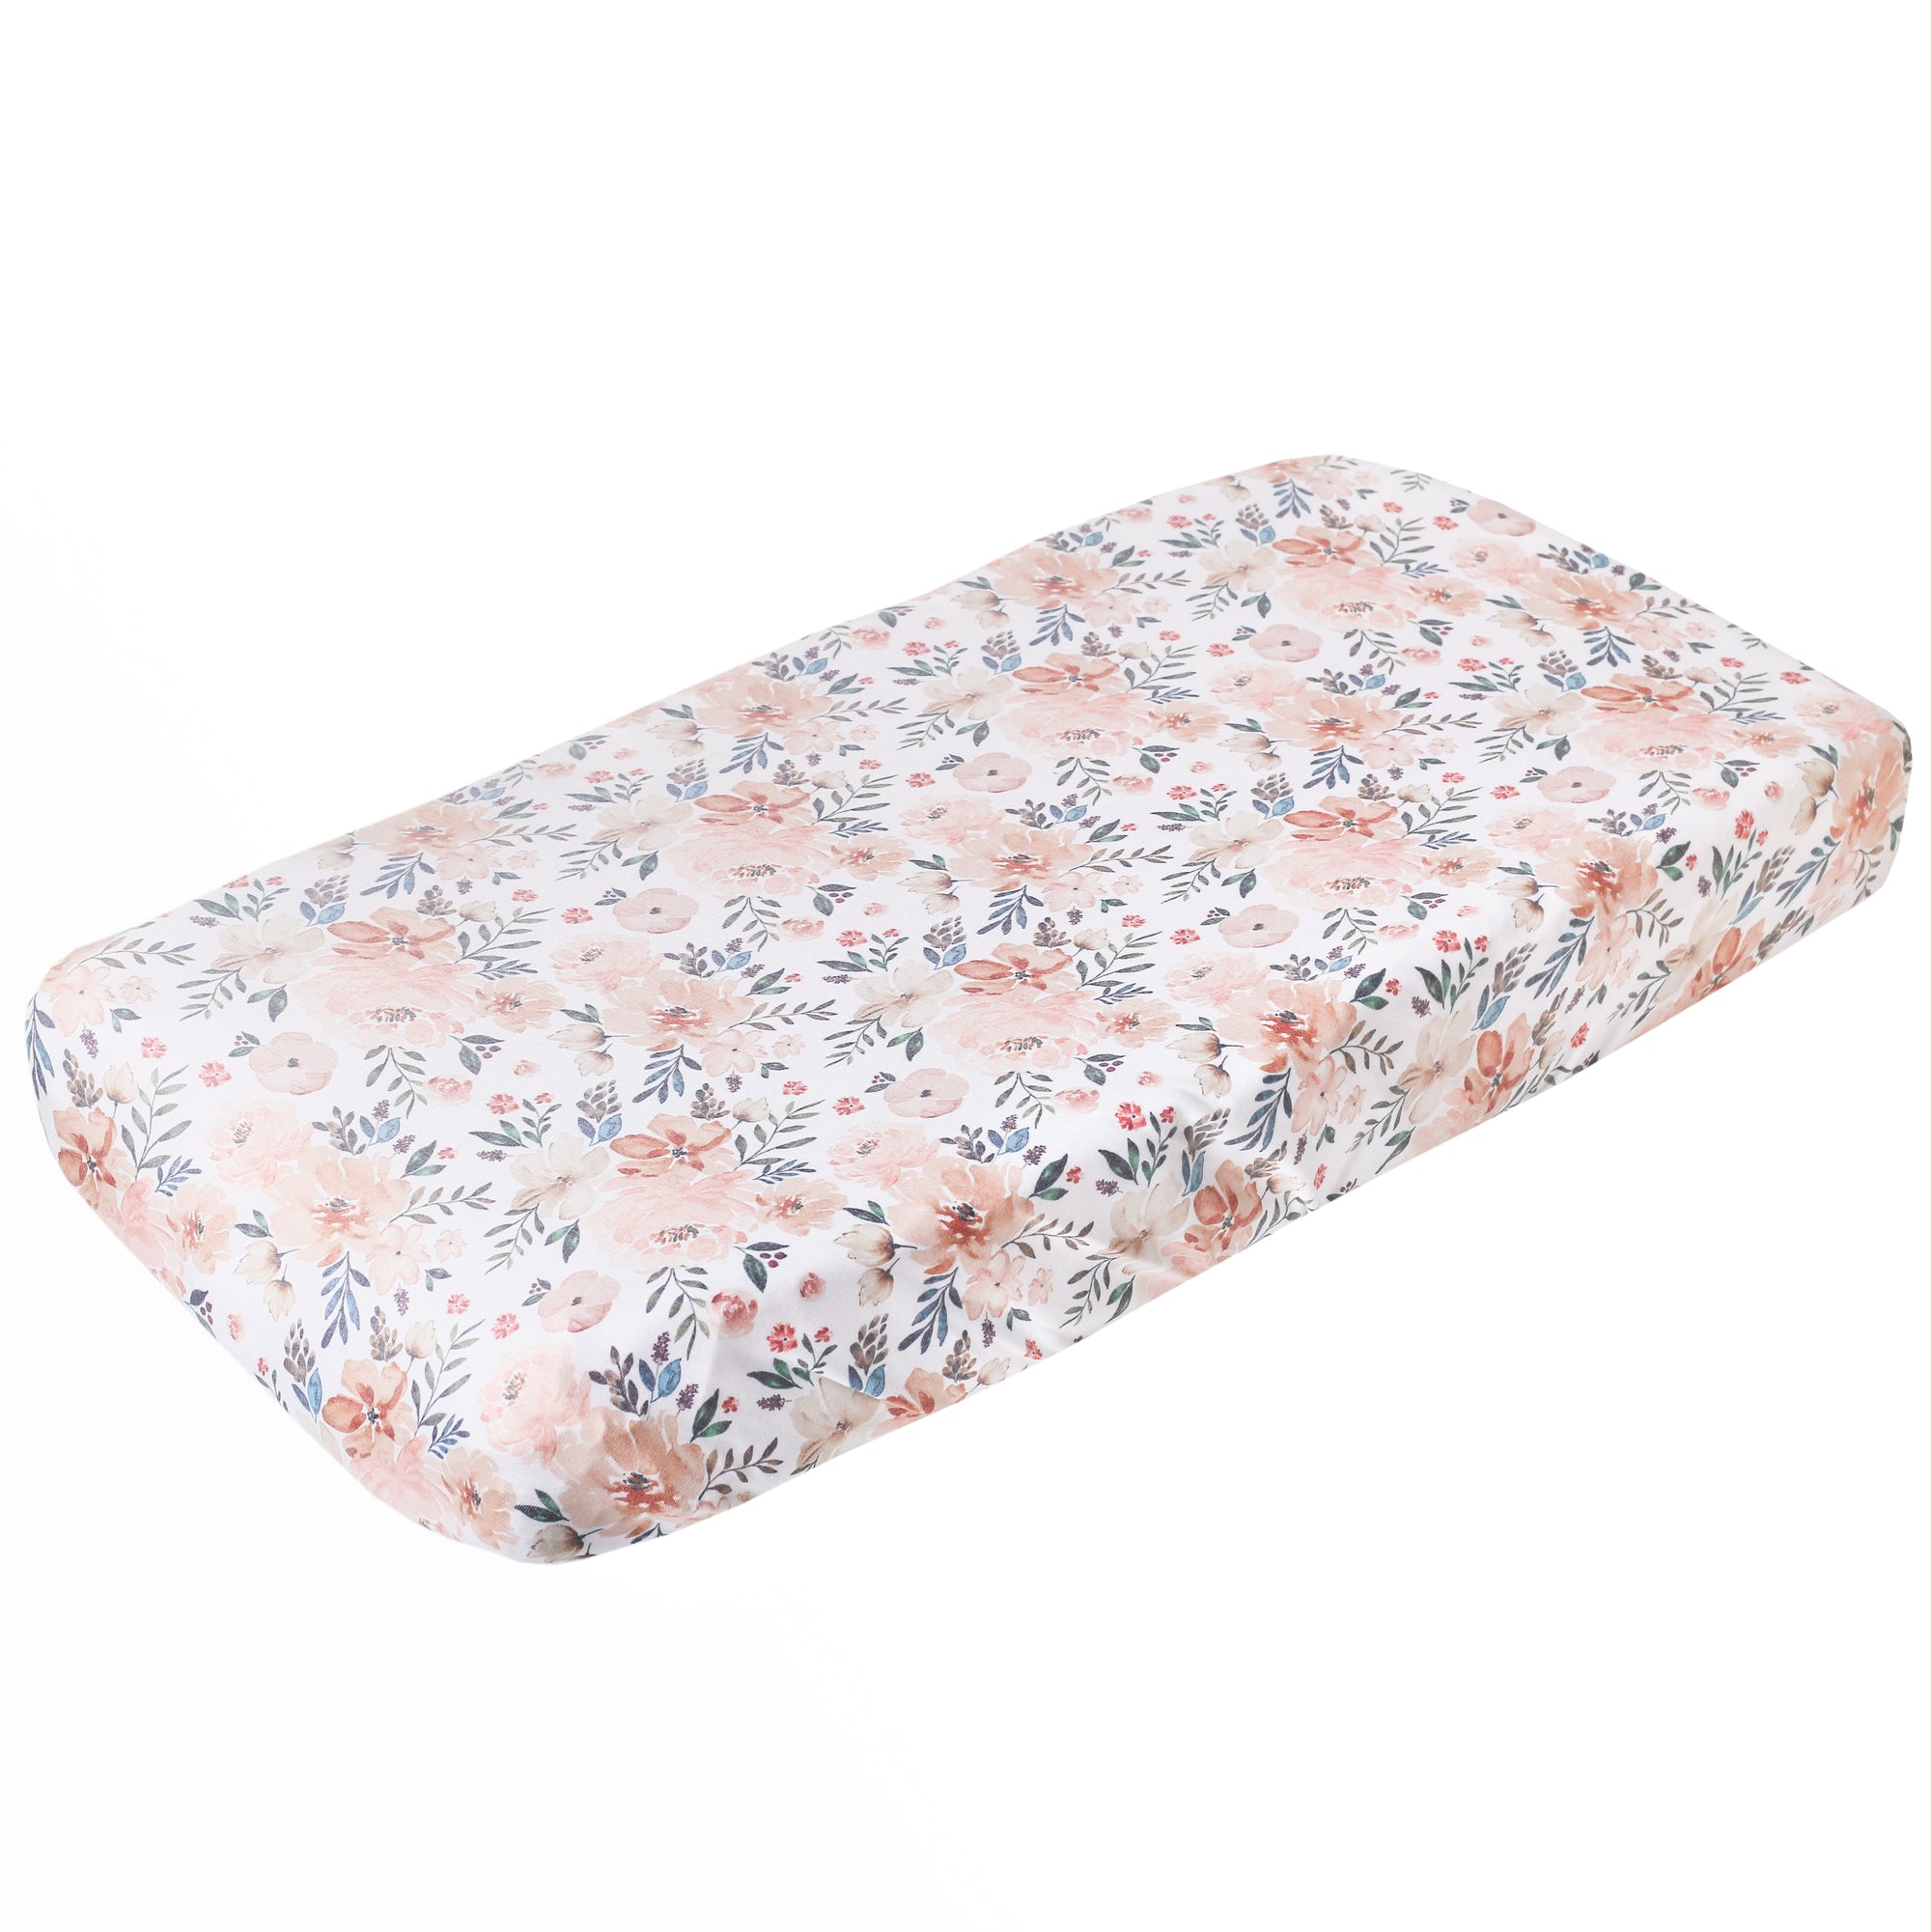 Premium Knit Diaper Changing Pad Cover - Autumn